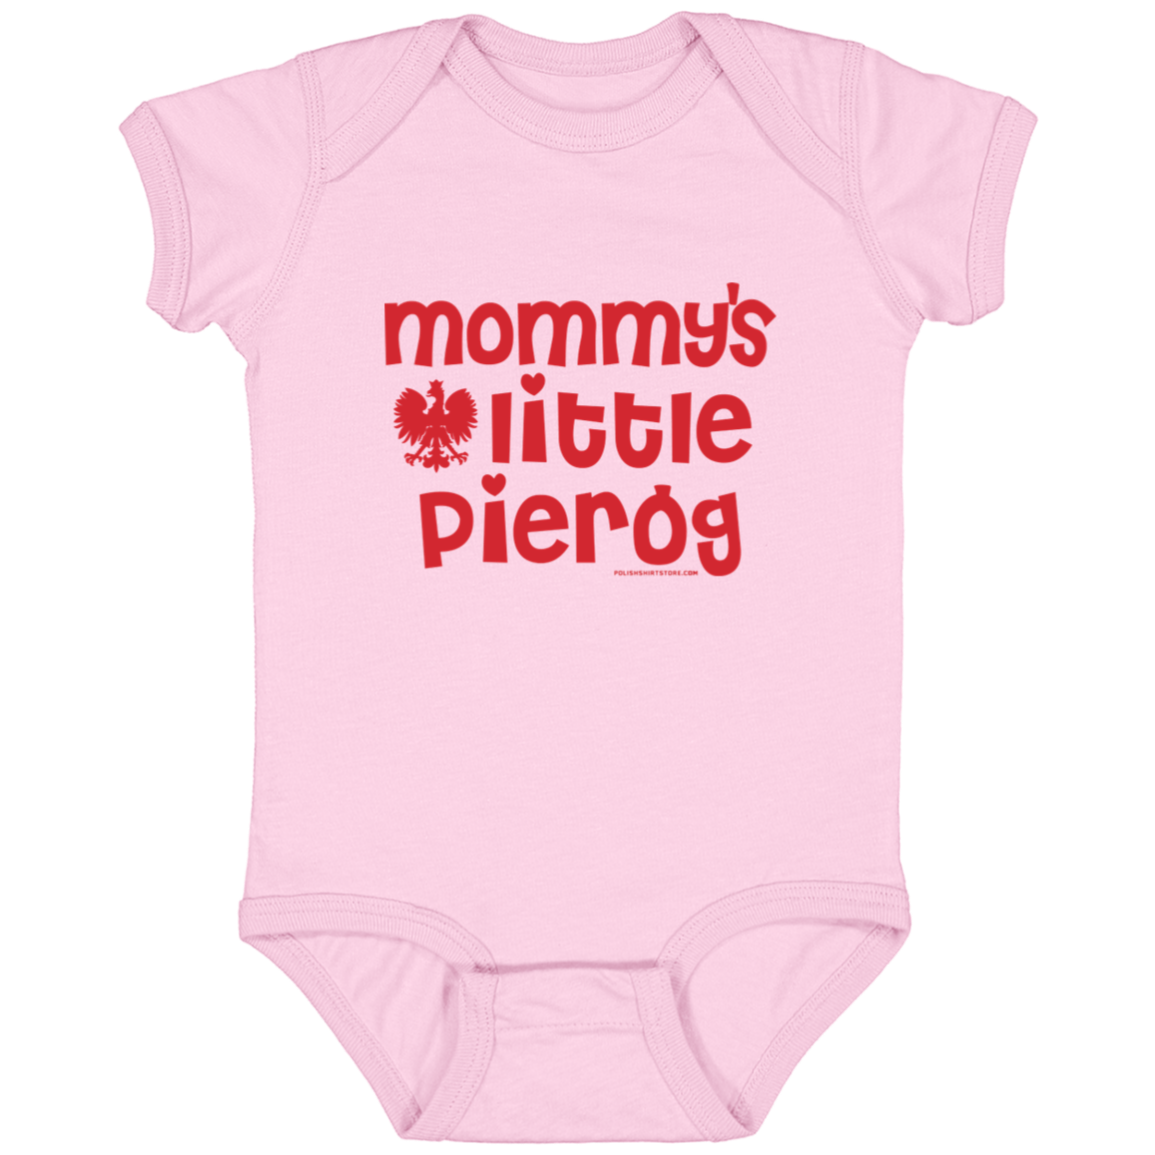 Mommy's Little Pierogi Infant Bodysuit Baby CustomCat Pink Newborn 